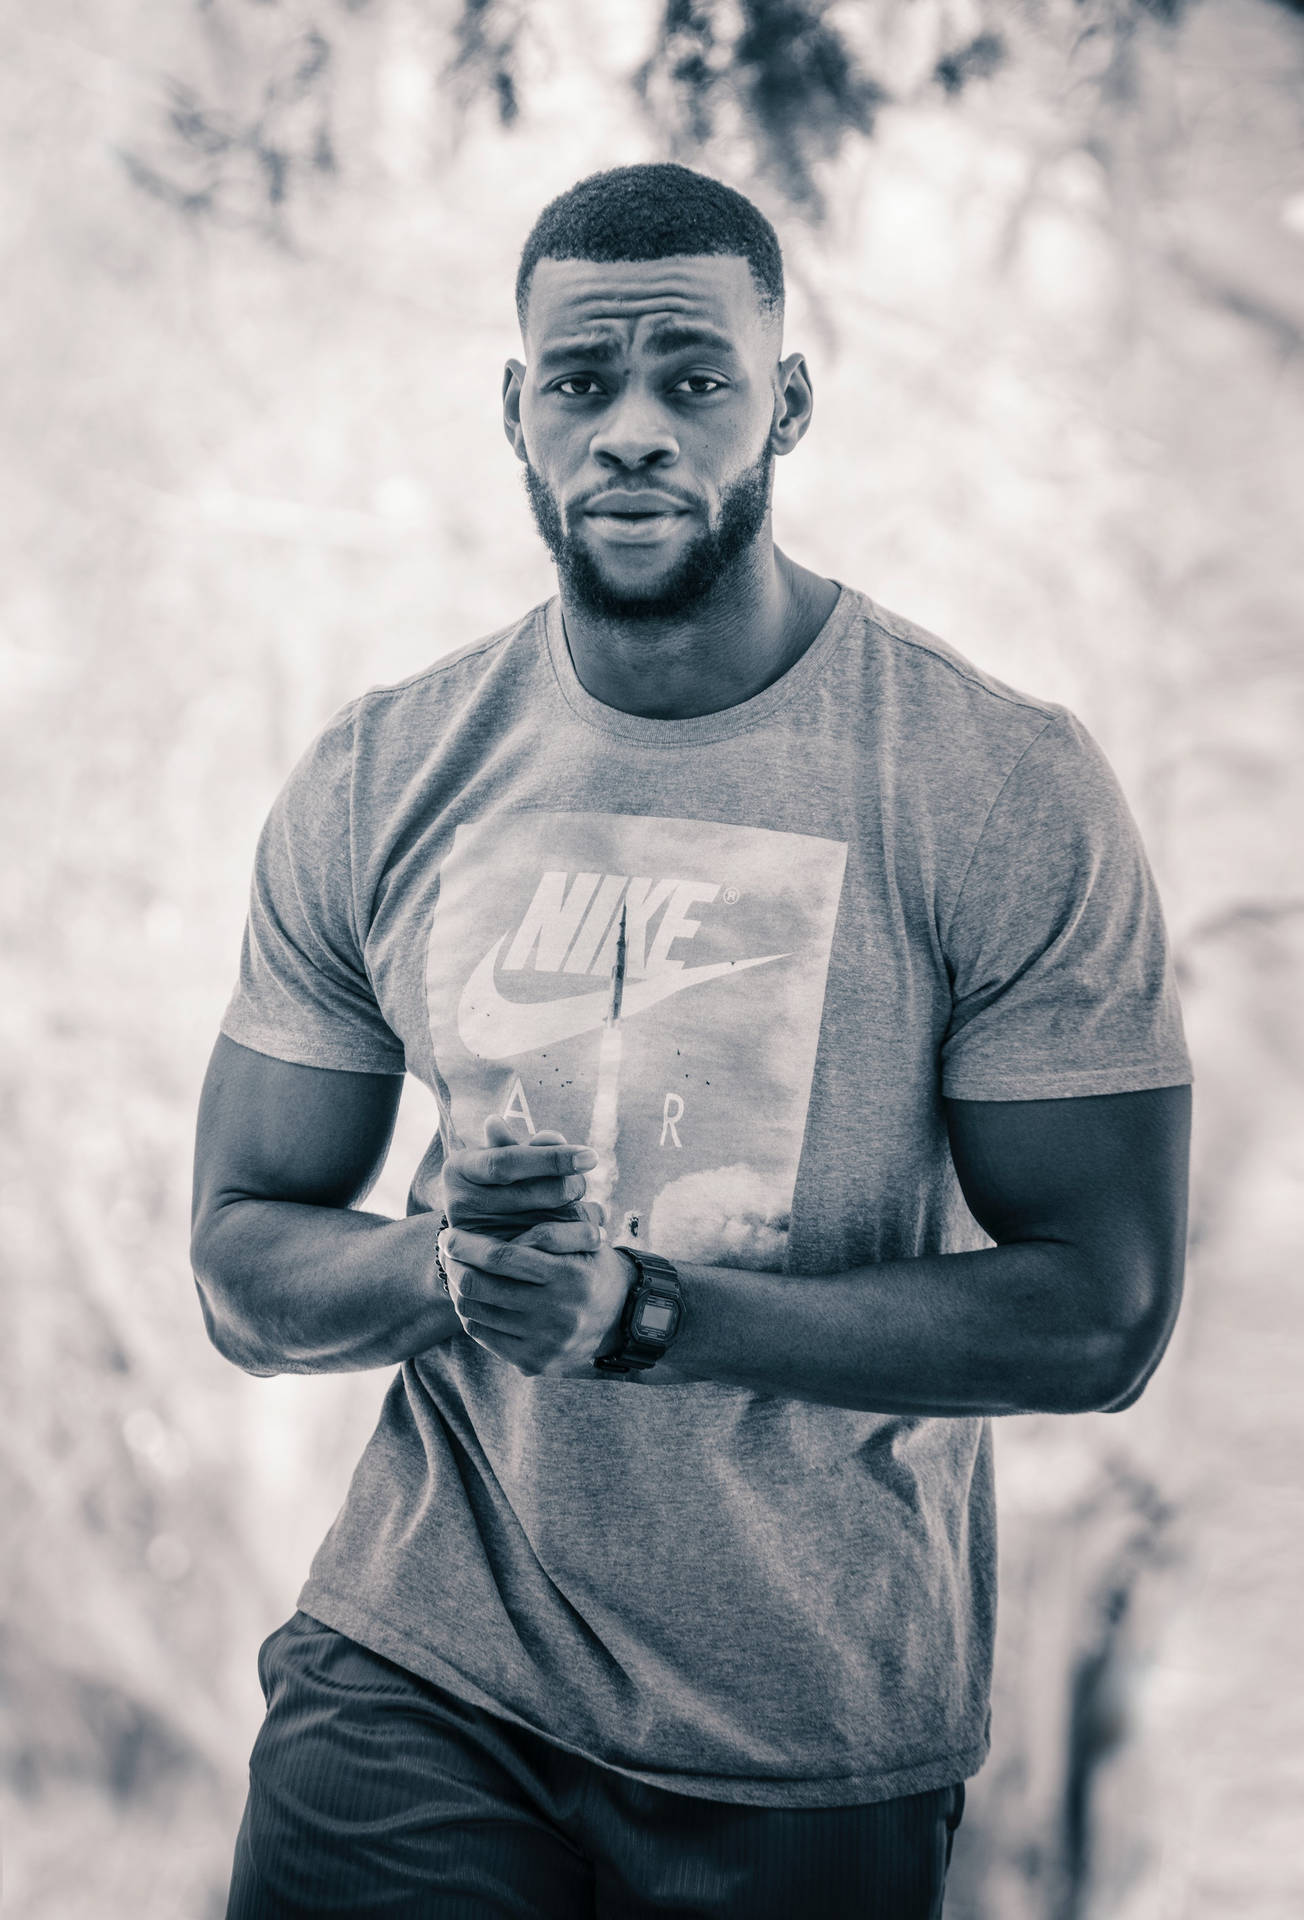 Black Man Modeling A Nike Air Shirt Background